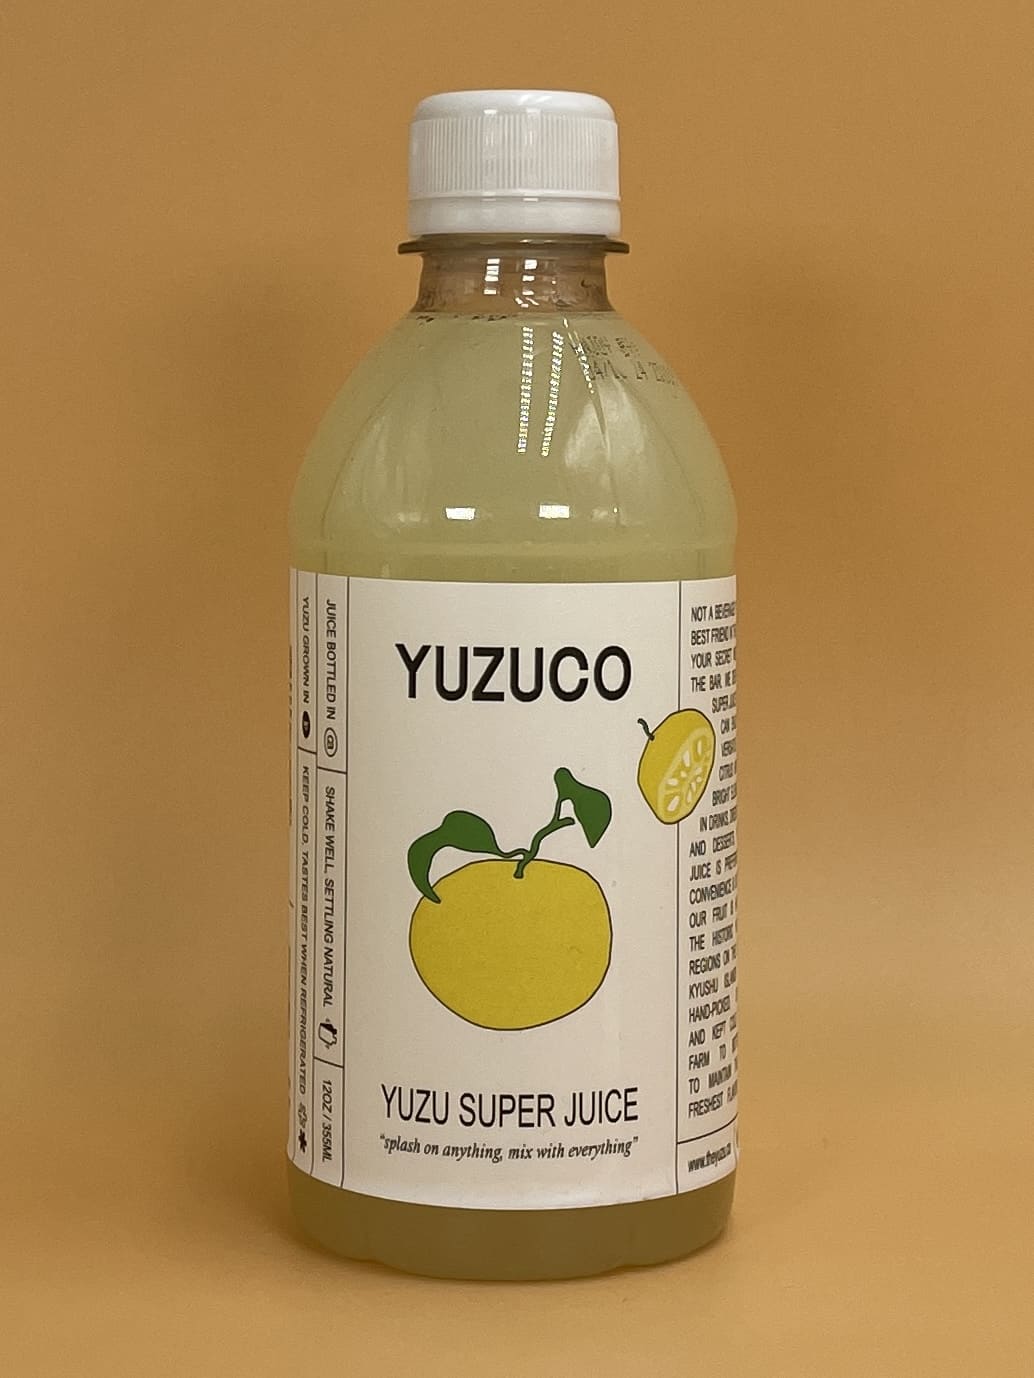 YUZUCO Yuzu Super Juice | 12 oz